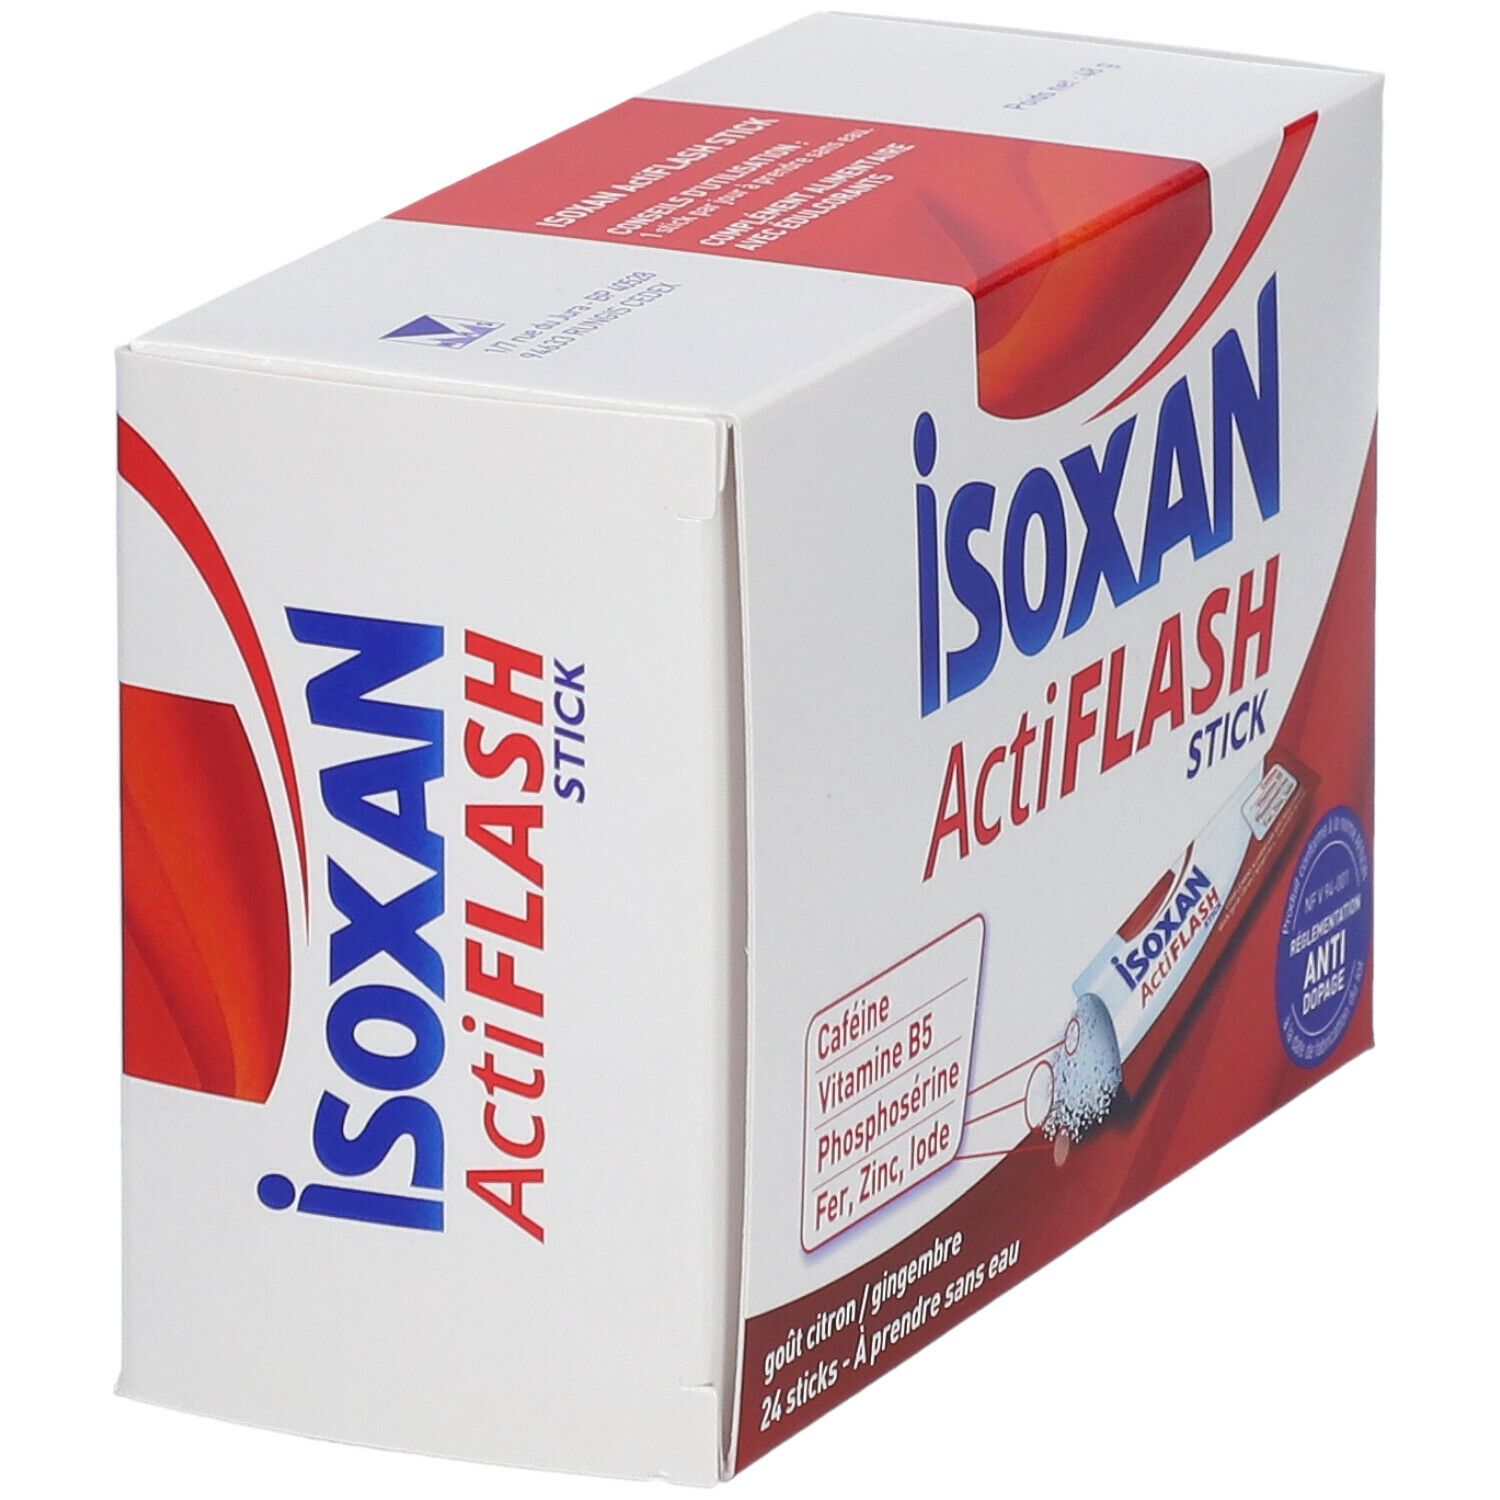 Isoxan® ActiFLASH Stick